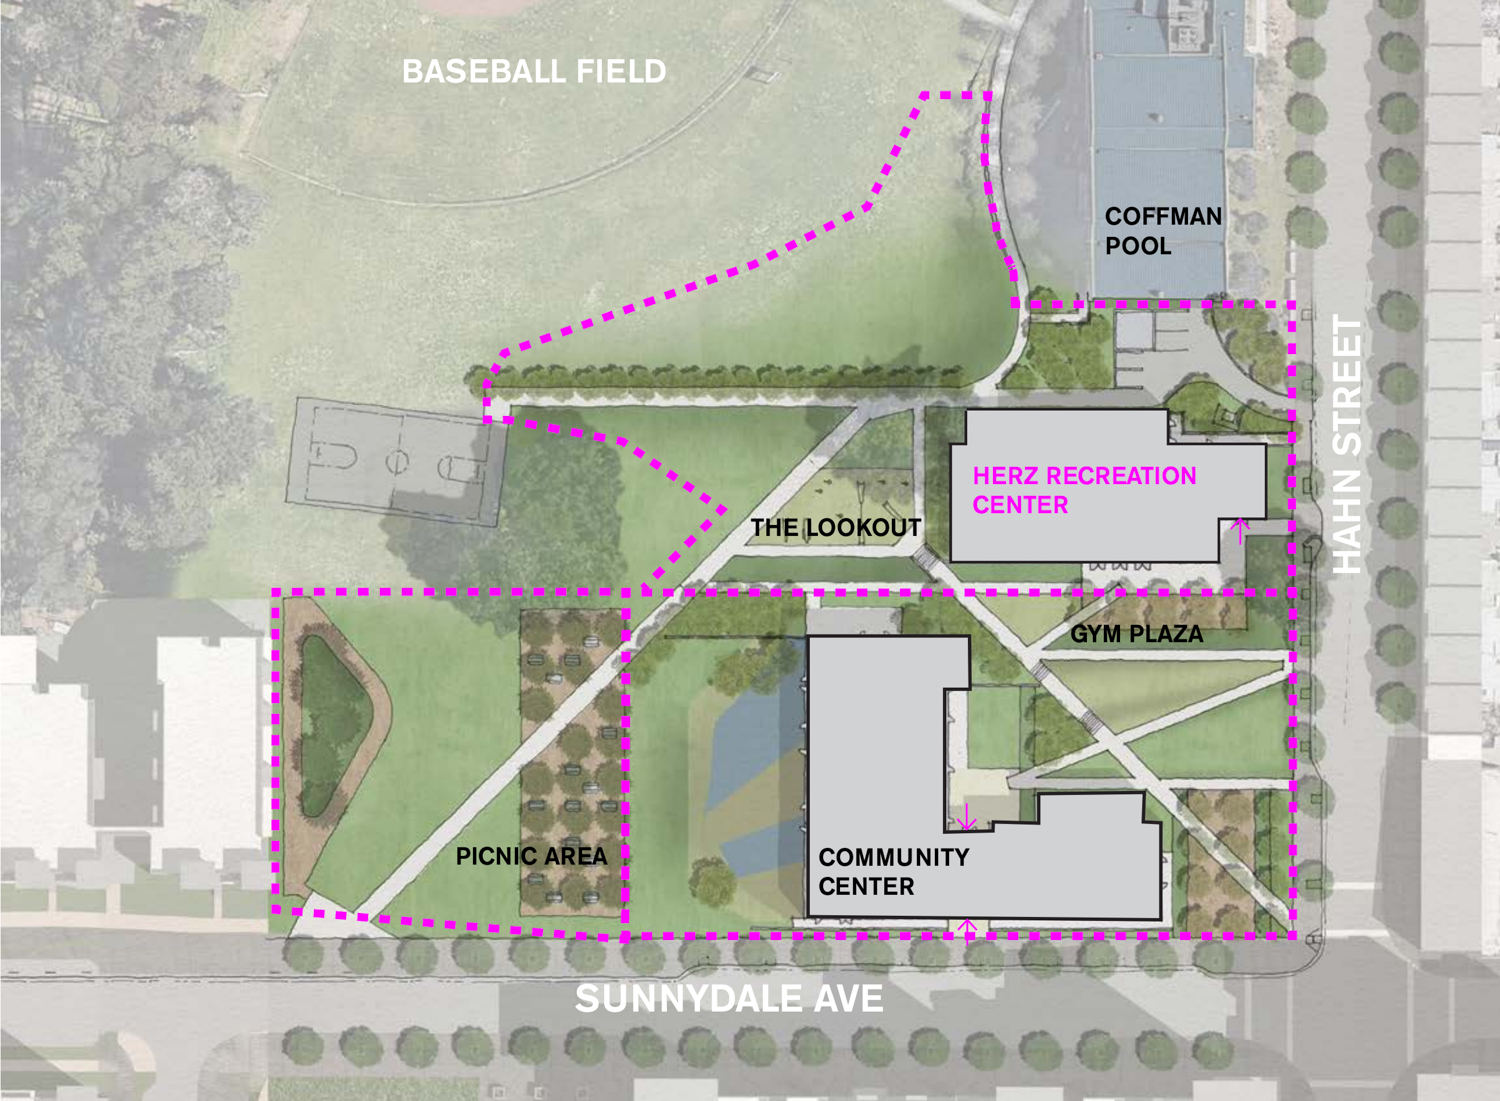 Herz Recreation Center site plan, design by Leddy Maytum Stacy Architects